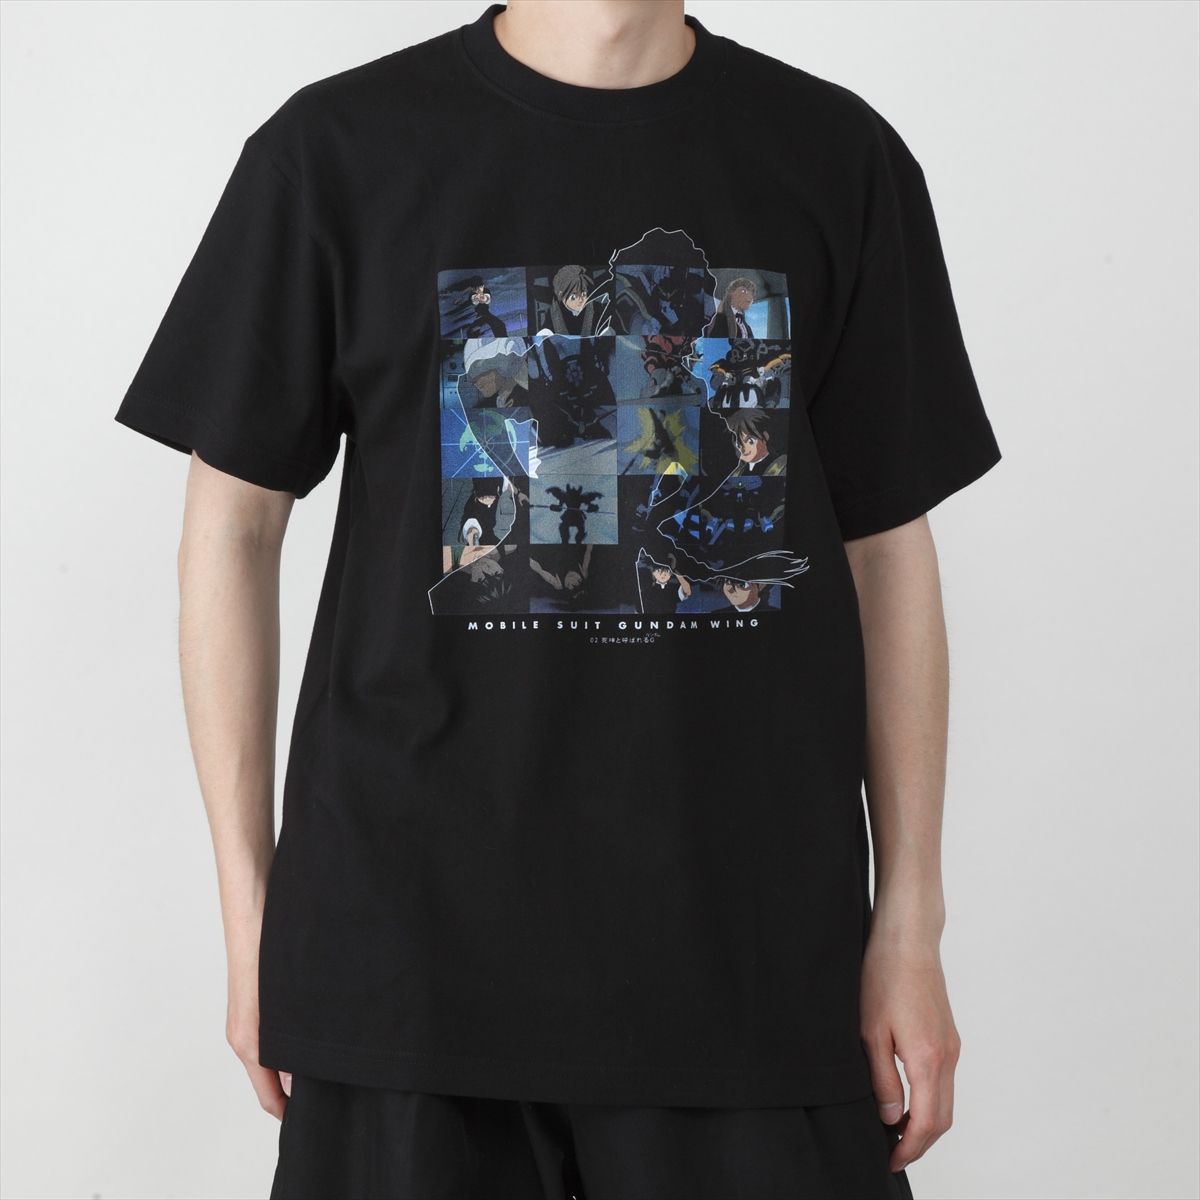 The Gundam Deathscythe T-shirt—Mobile Suit Gundam Wing